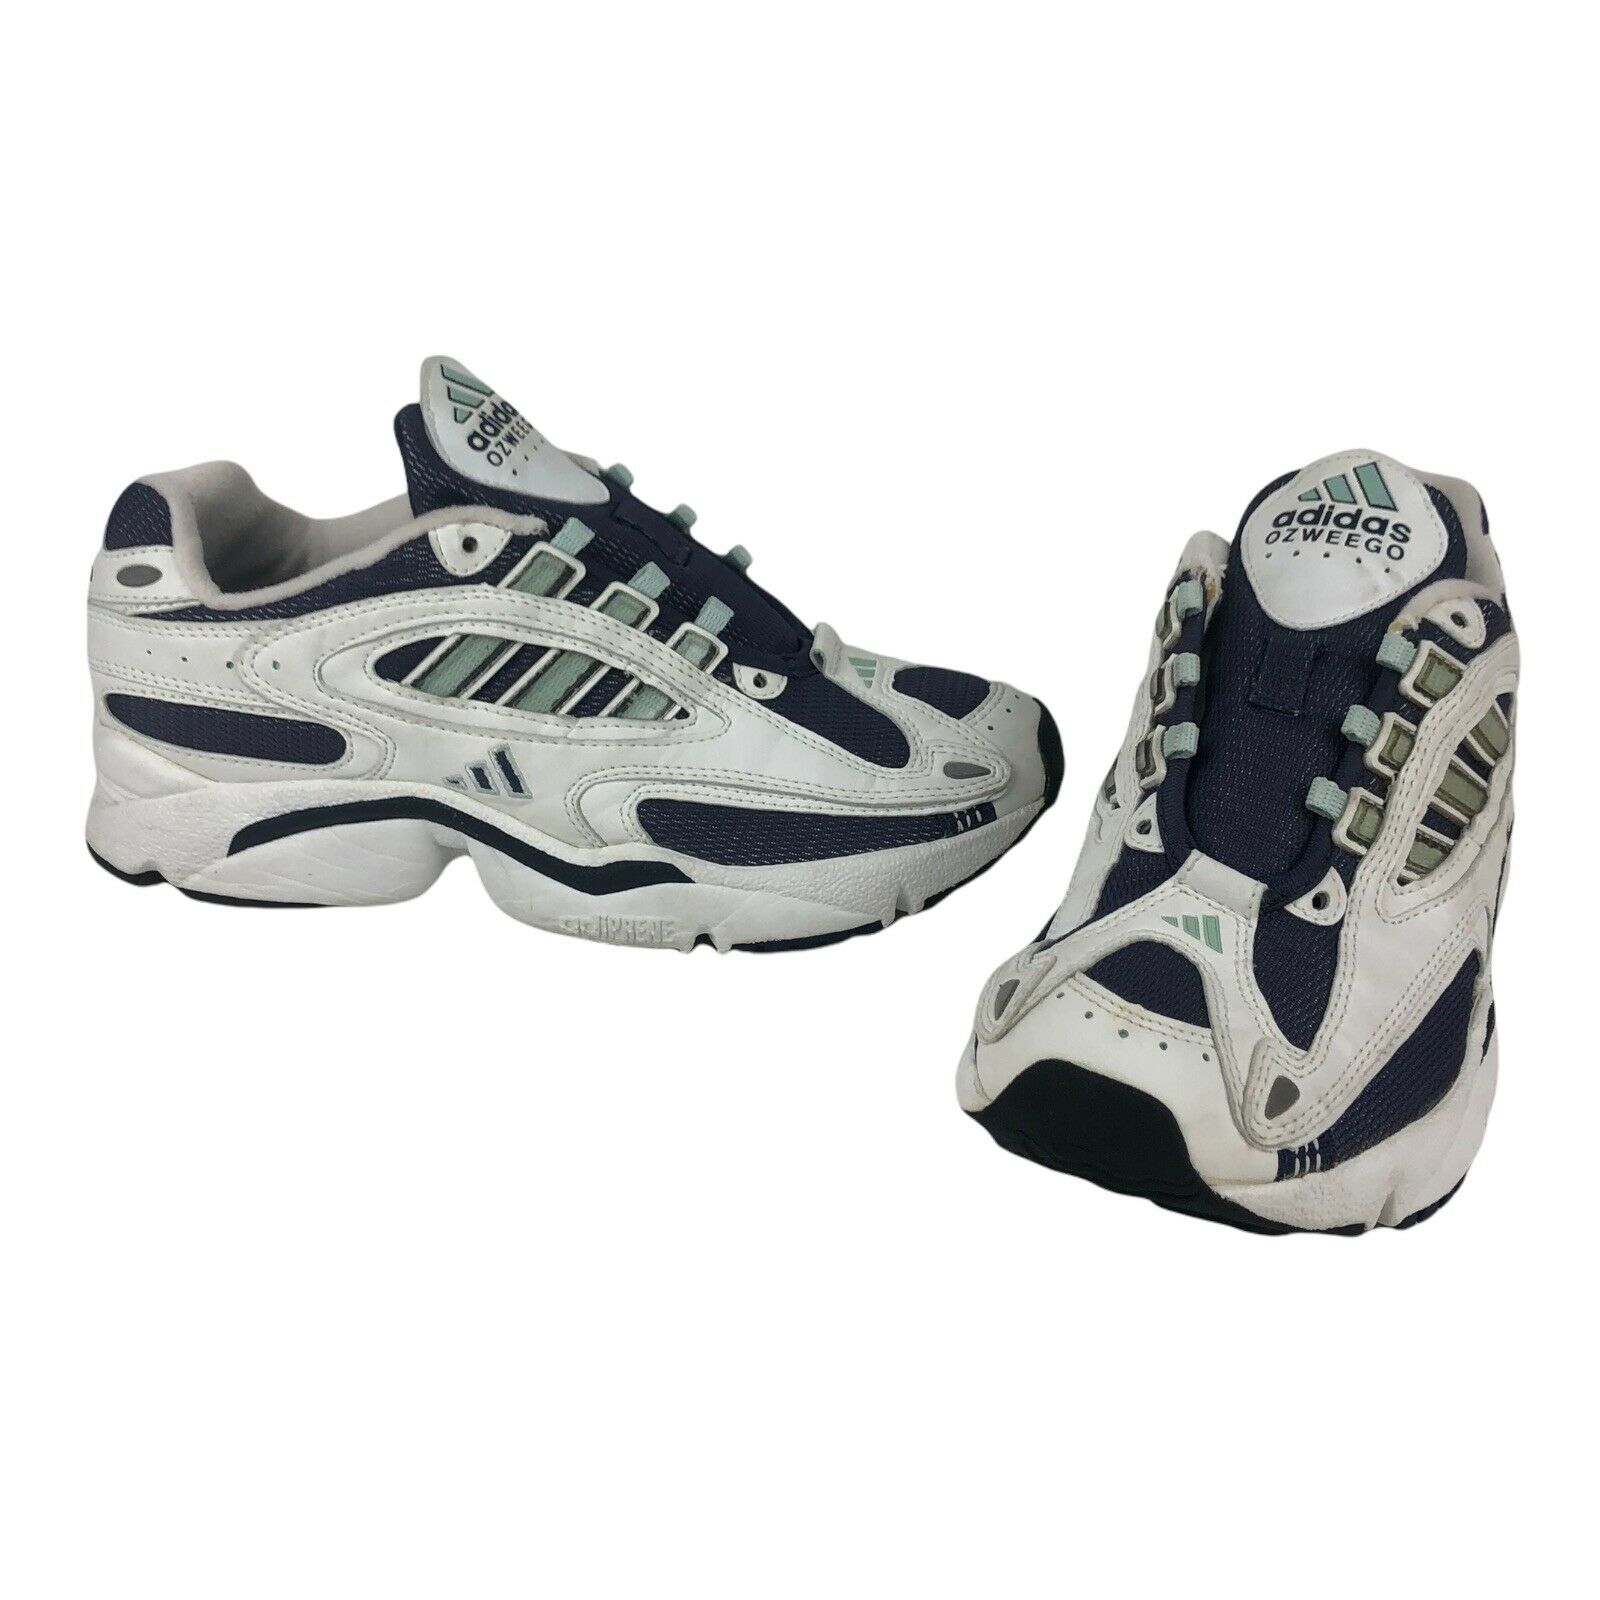 Adidas Ozweego Adiprene Torsion Original VTG 2000 Running Shoes Sz 6.5 -No Laces